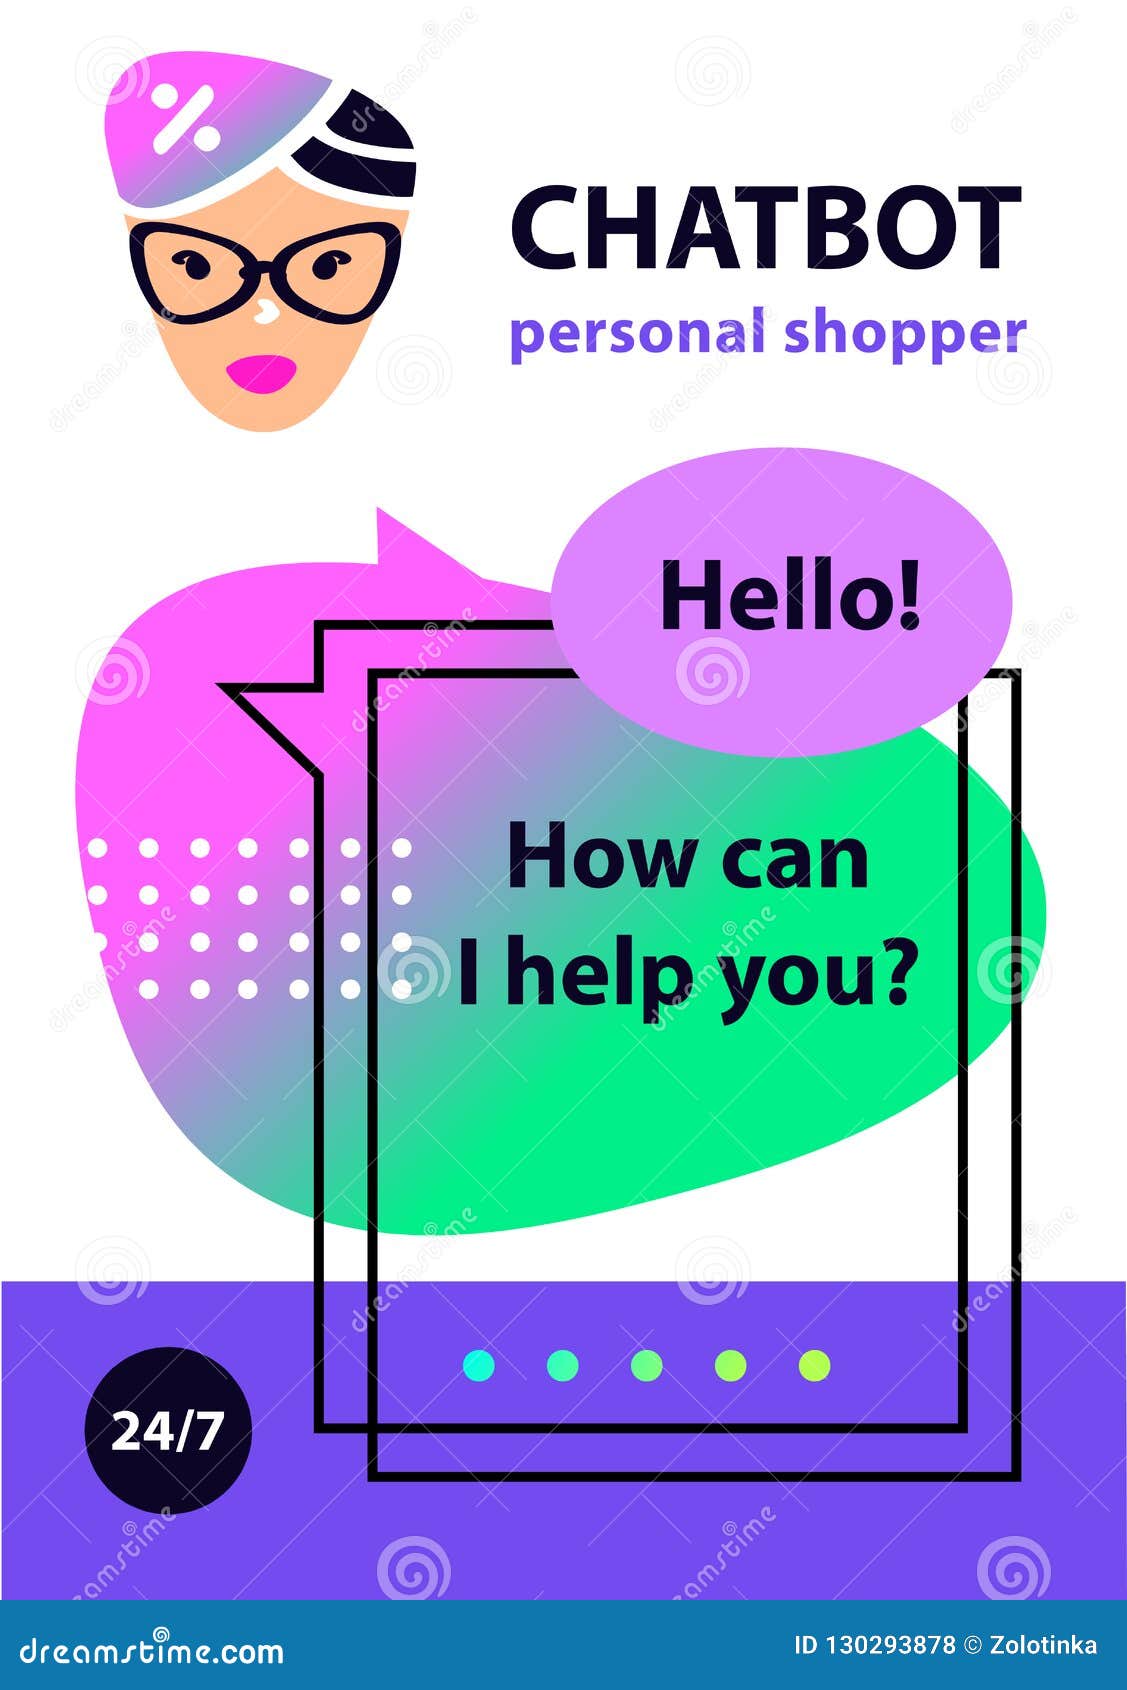 personal shopper logos, yourshopper // personal shopper // logo design //  2010 on Behance